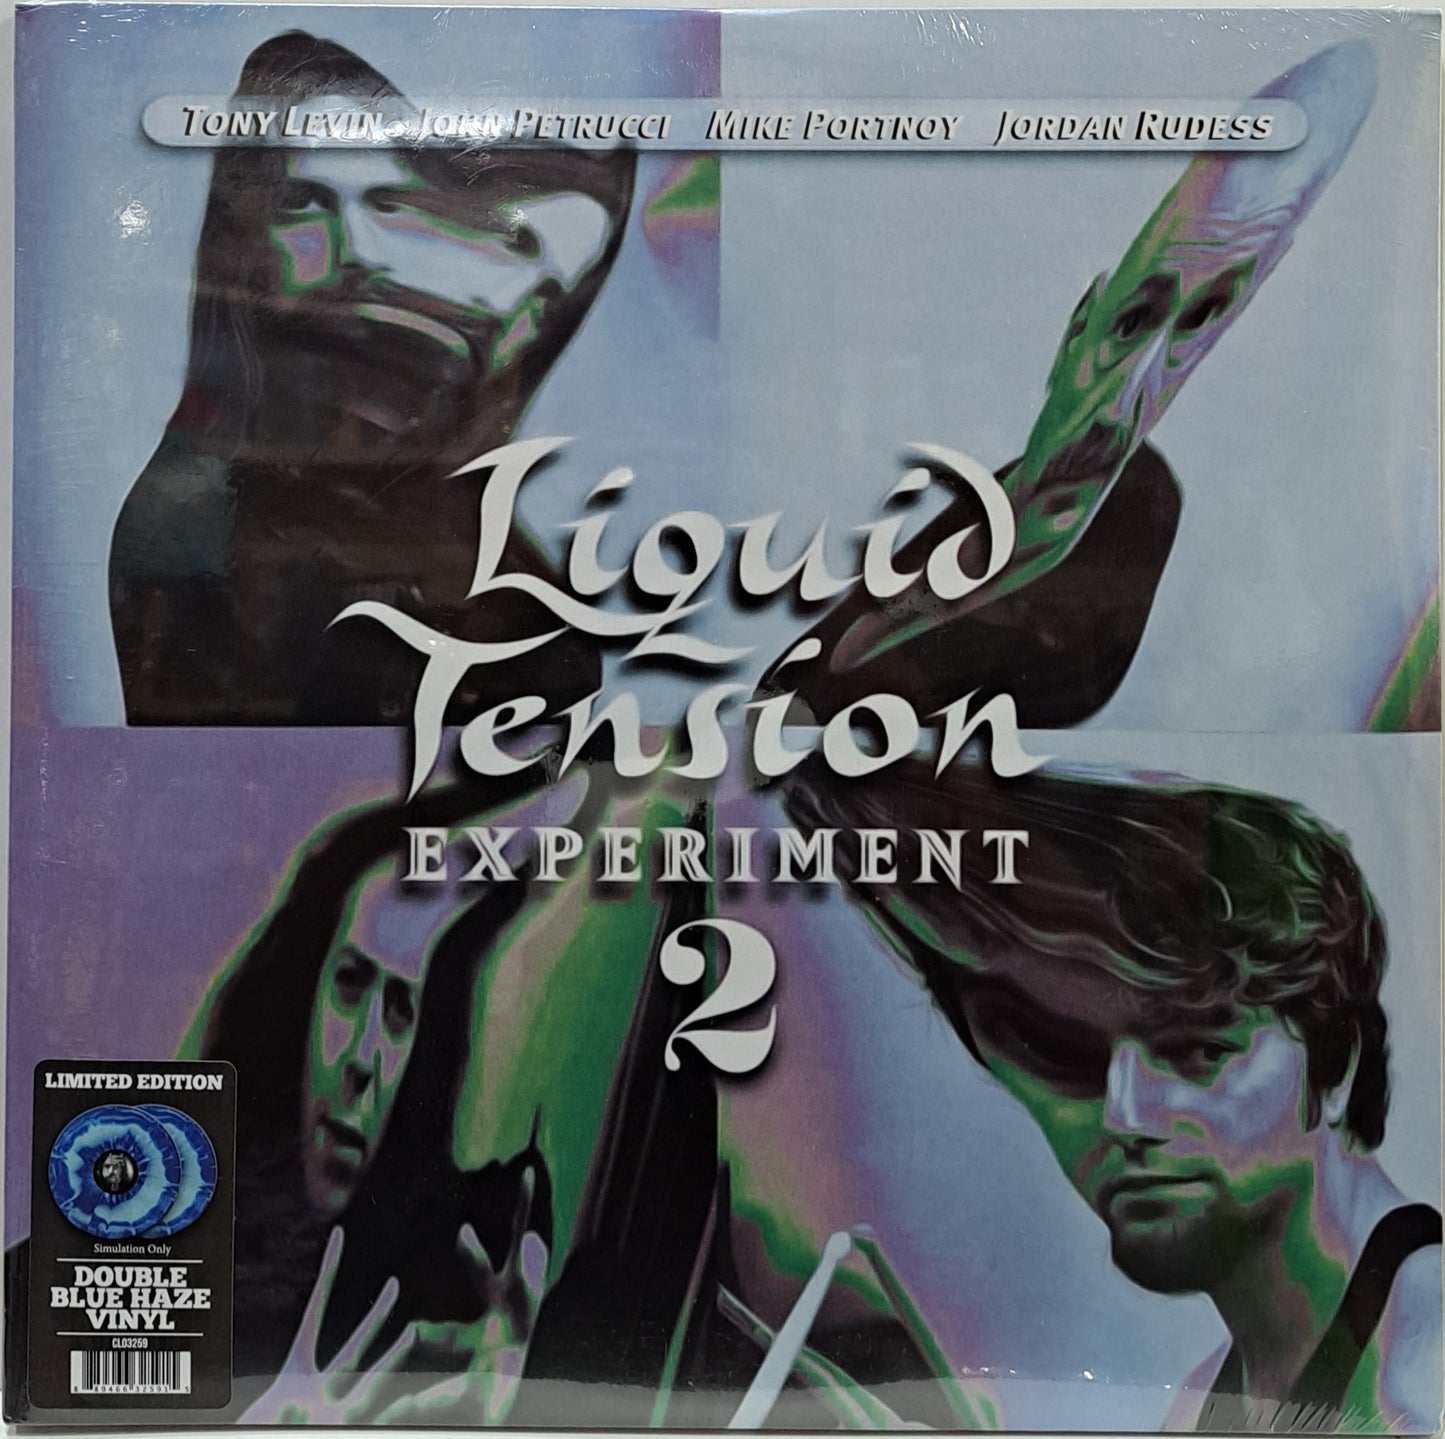 LIQUID TENSION - EXPERIMENT 2  2 LPS